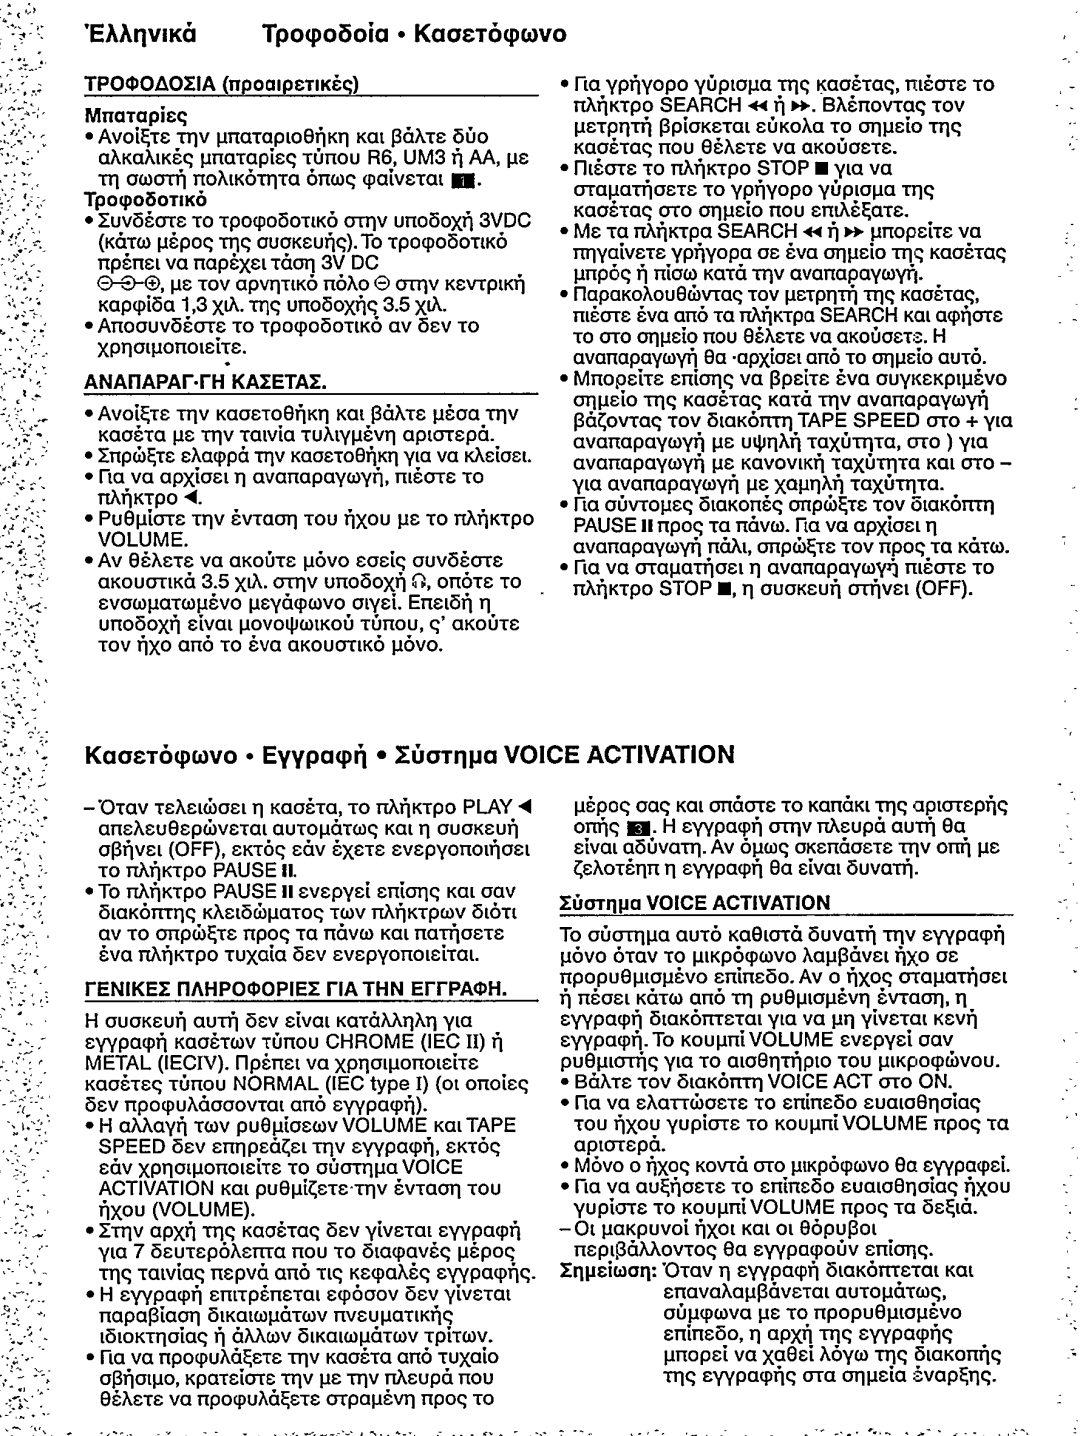 Philips AQ6340/14Z manual 